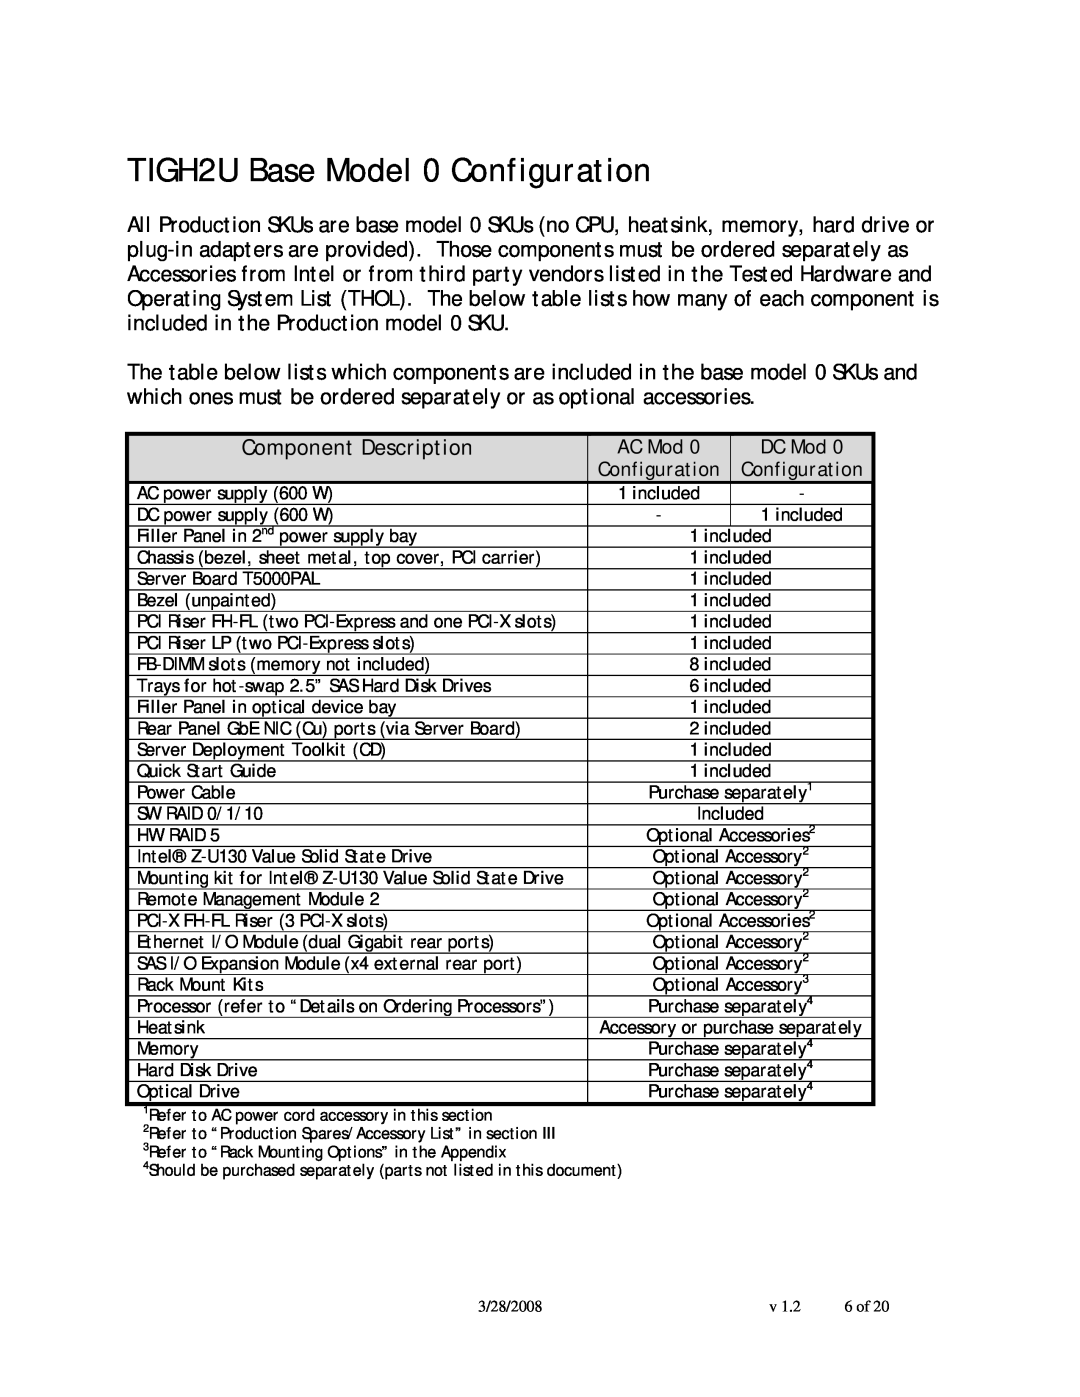 Intel manual TIGH2U Base Model 0 Configuration, Component Description 